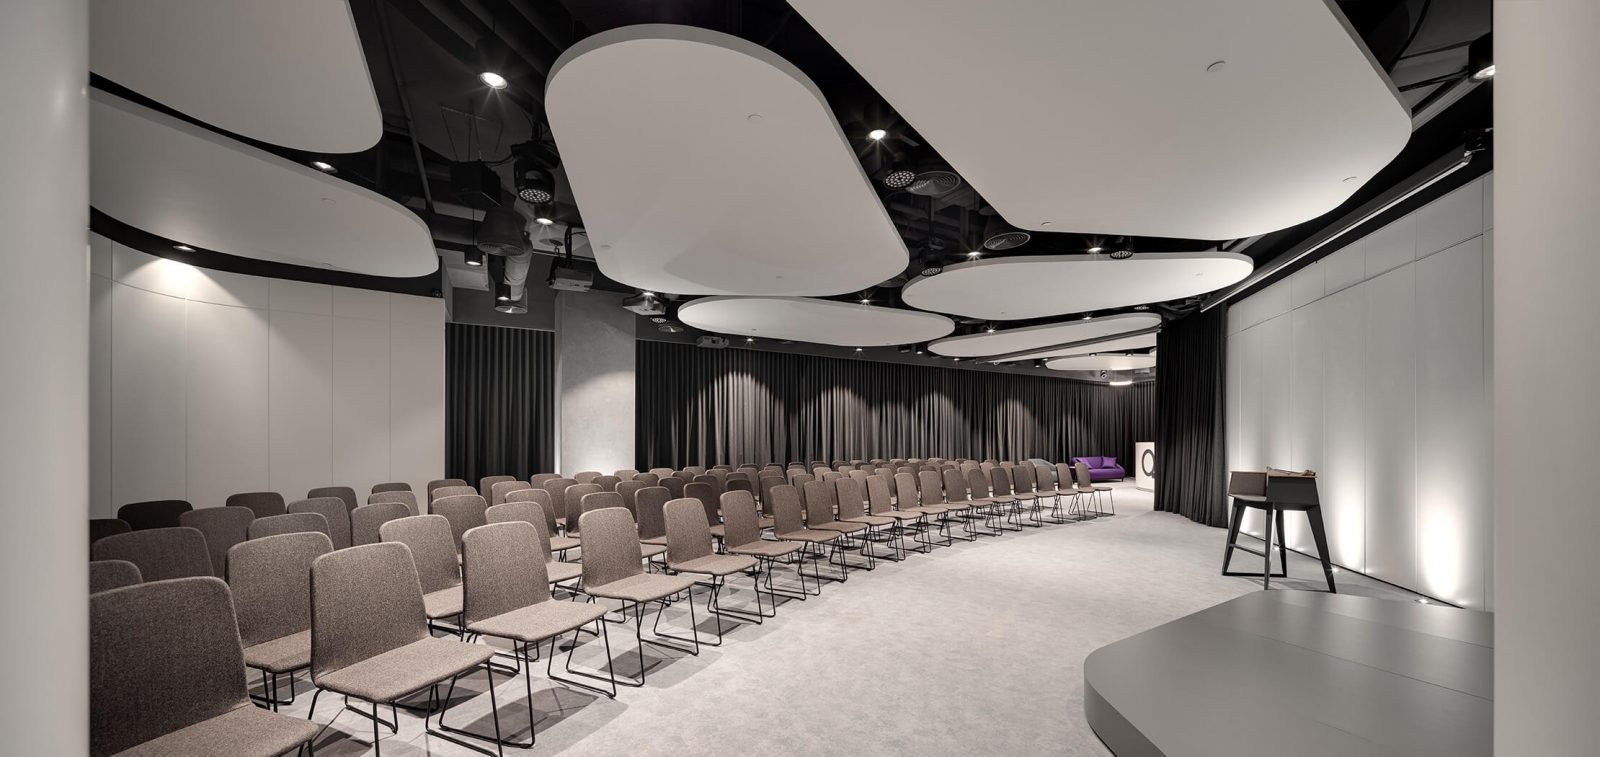 Exhibition & conference rooms interior design